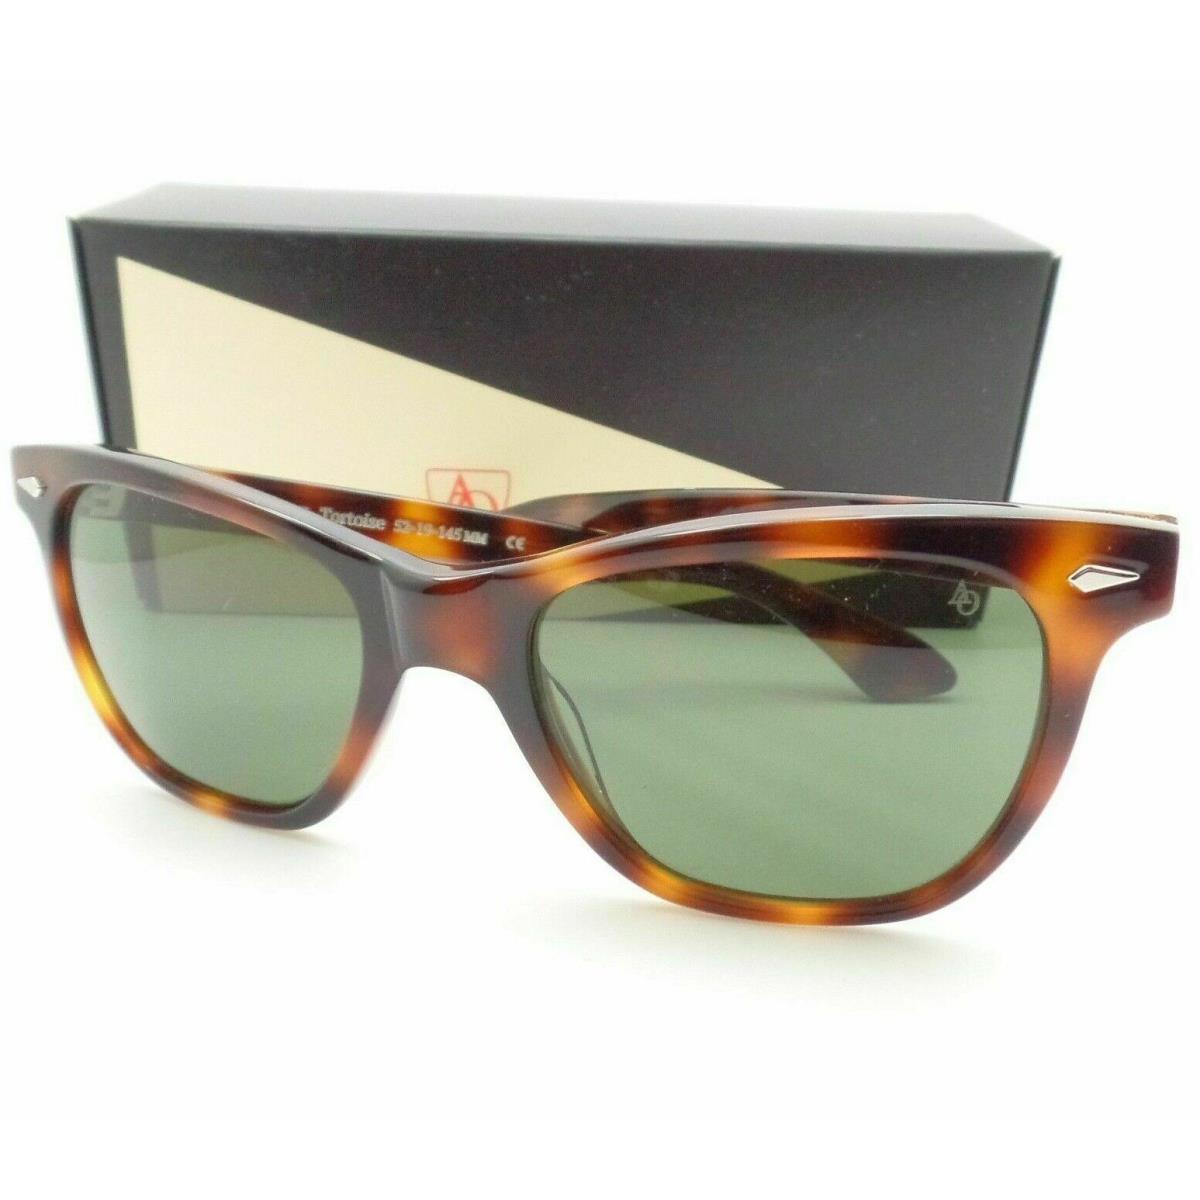 AO American Optical Saratoga Sunglasses Tortoise 1 Green Polar or Frame Only